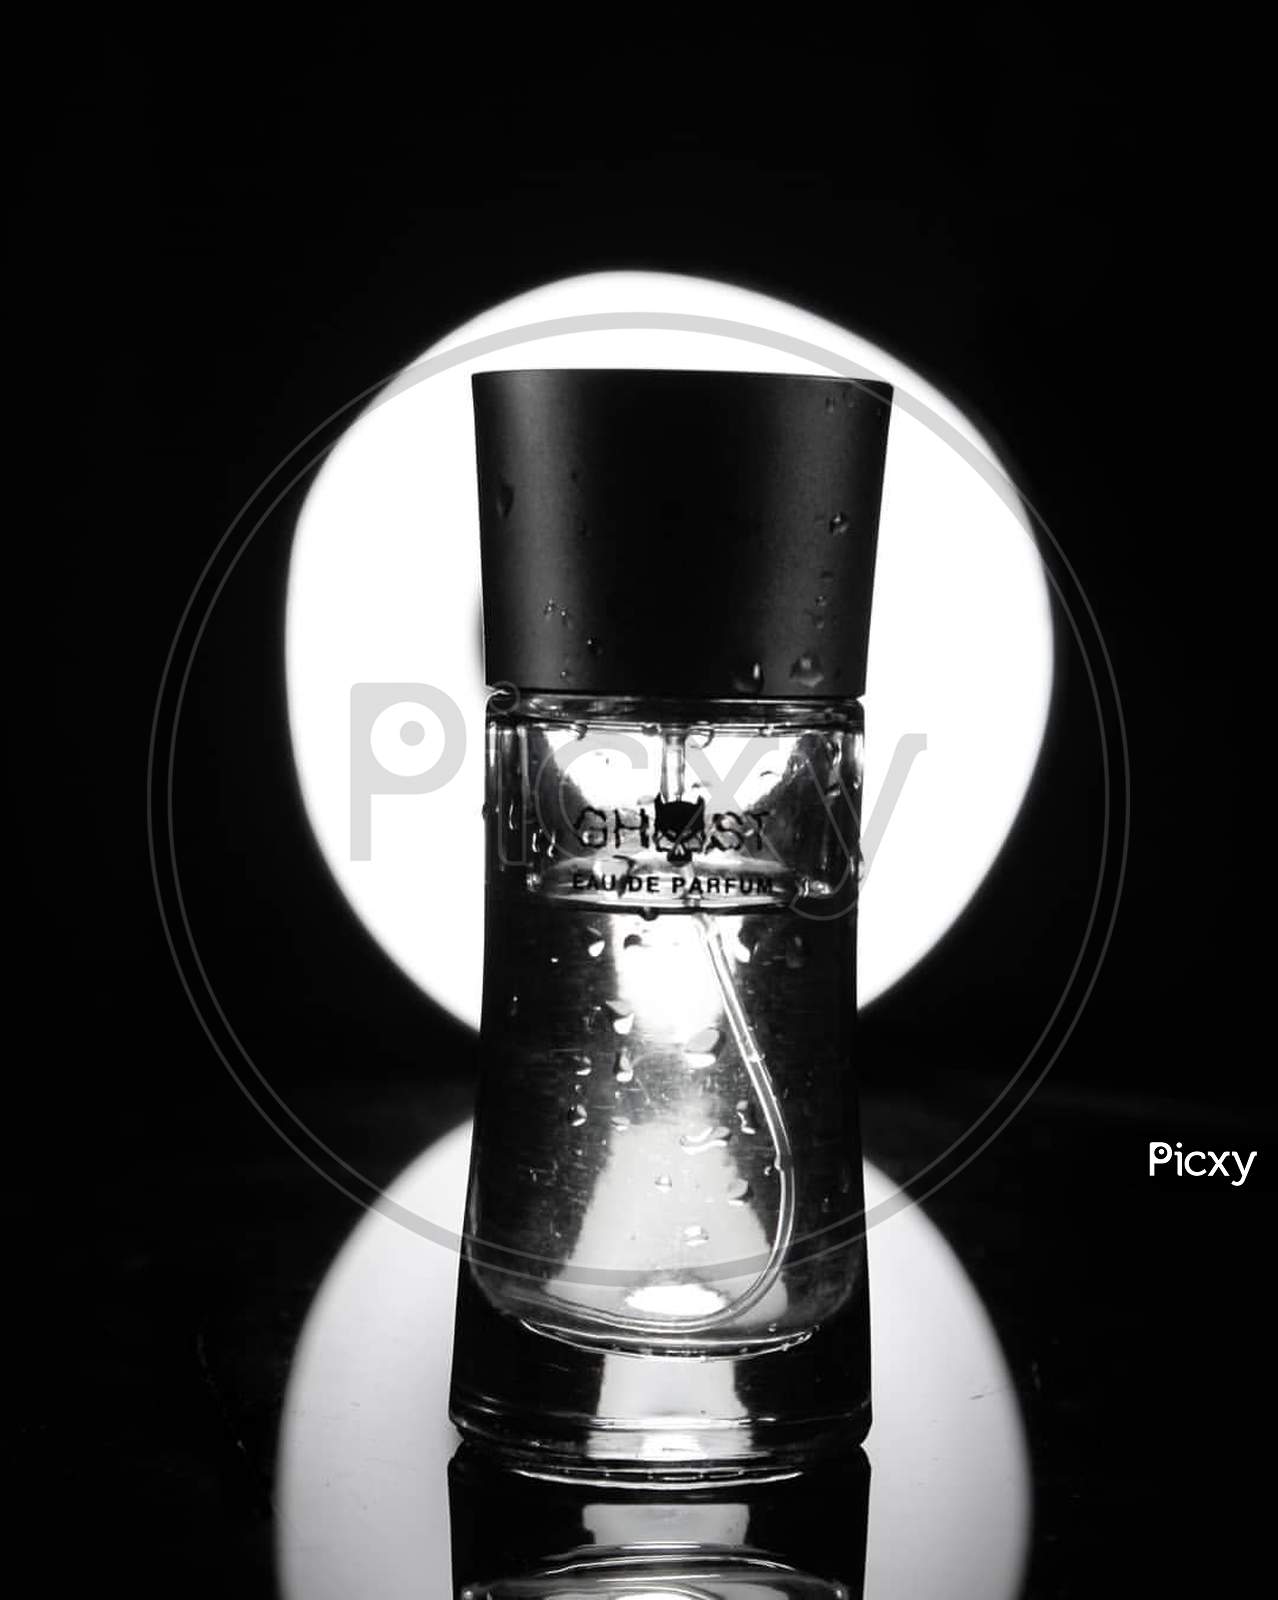 Creative GHOST perfume bottle photoshoot product